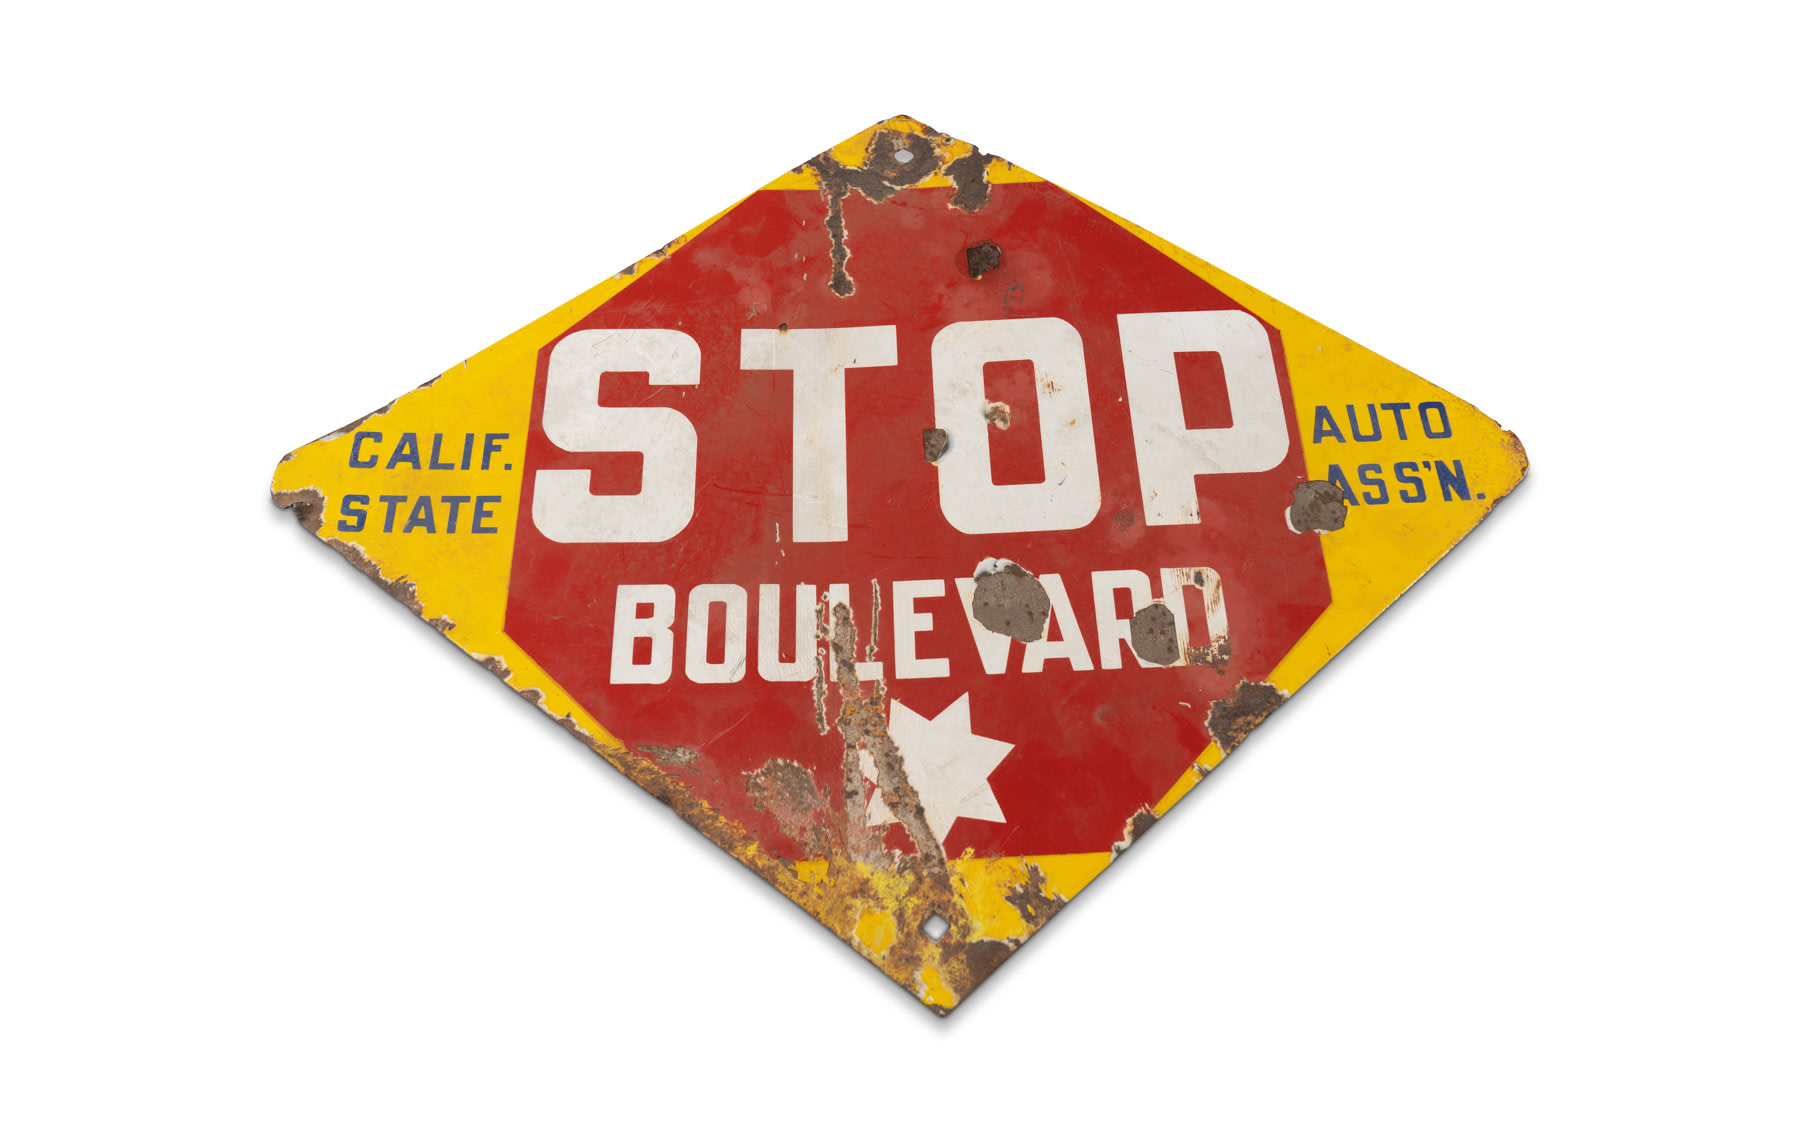 California State Auto Association Boulevard Stop Sign, c. 1920s